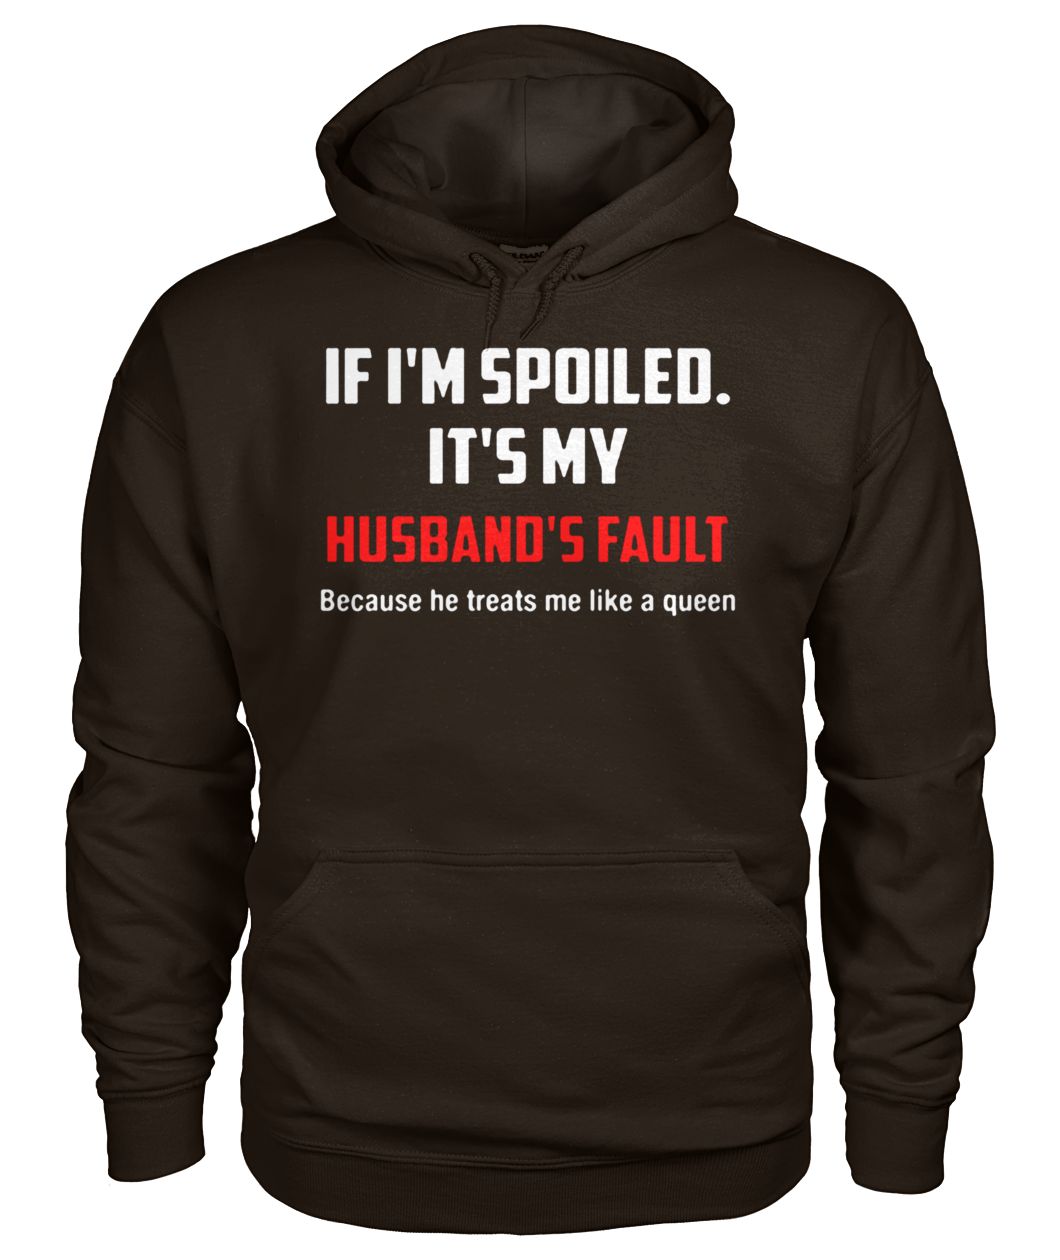 If I'm spoiled it's my husband's fault gildan hoodie